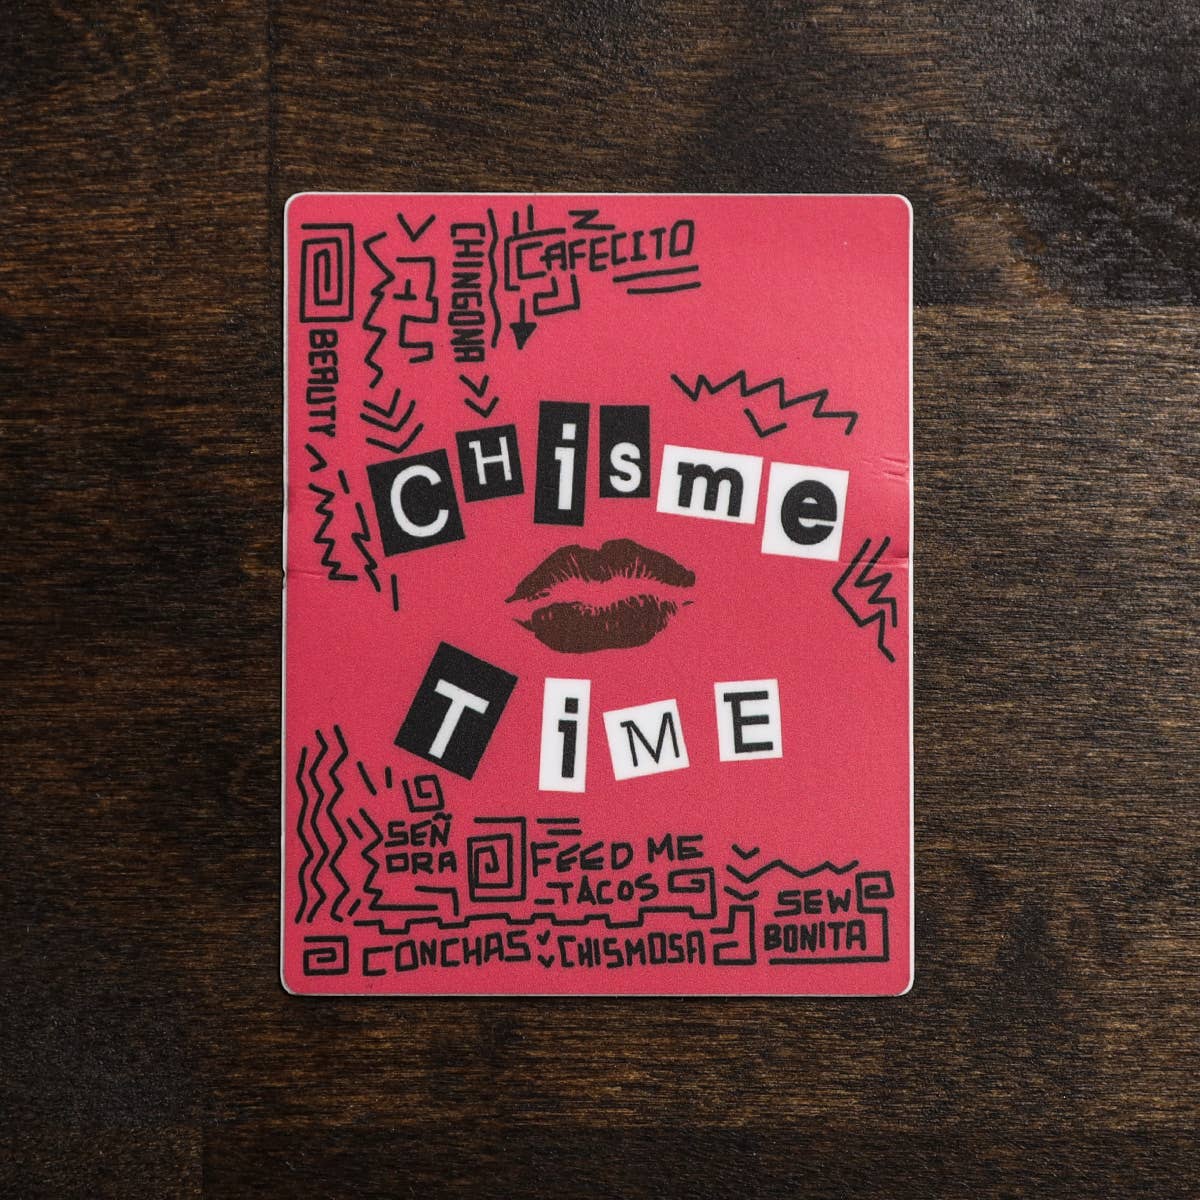 Chisme Time Sticker - Tuma's Books